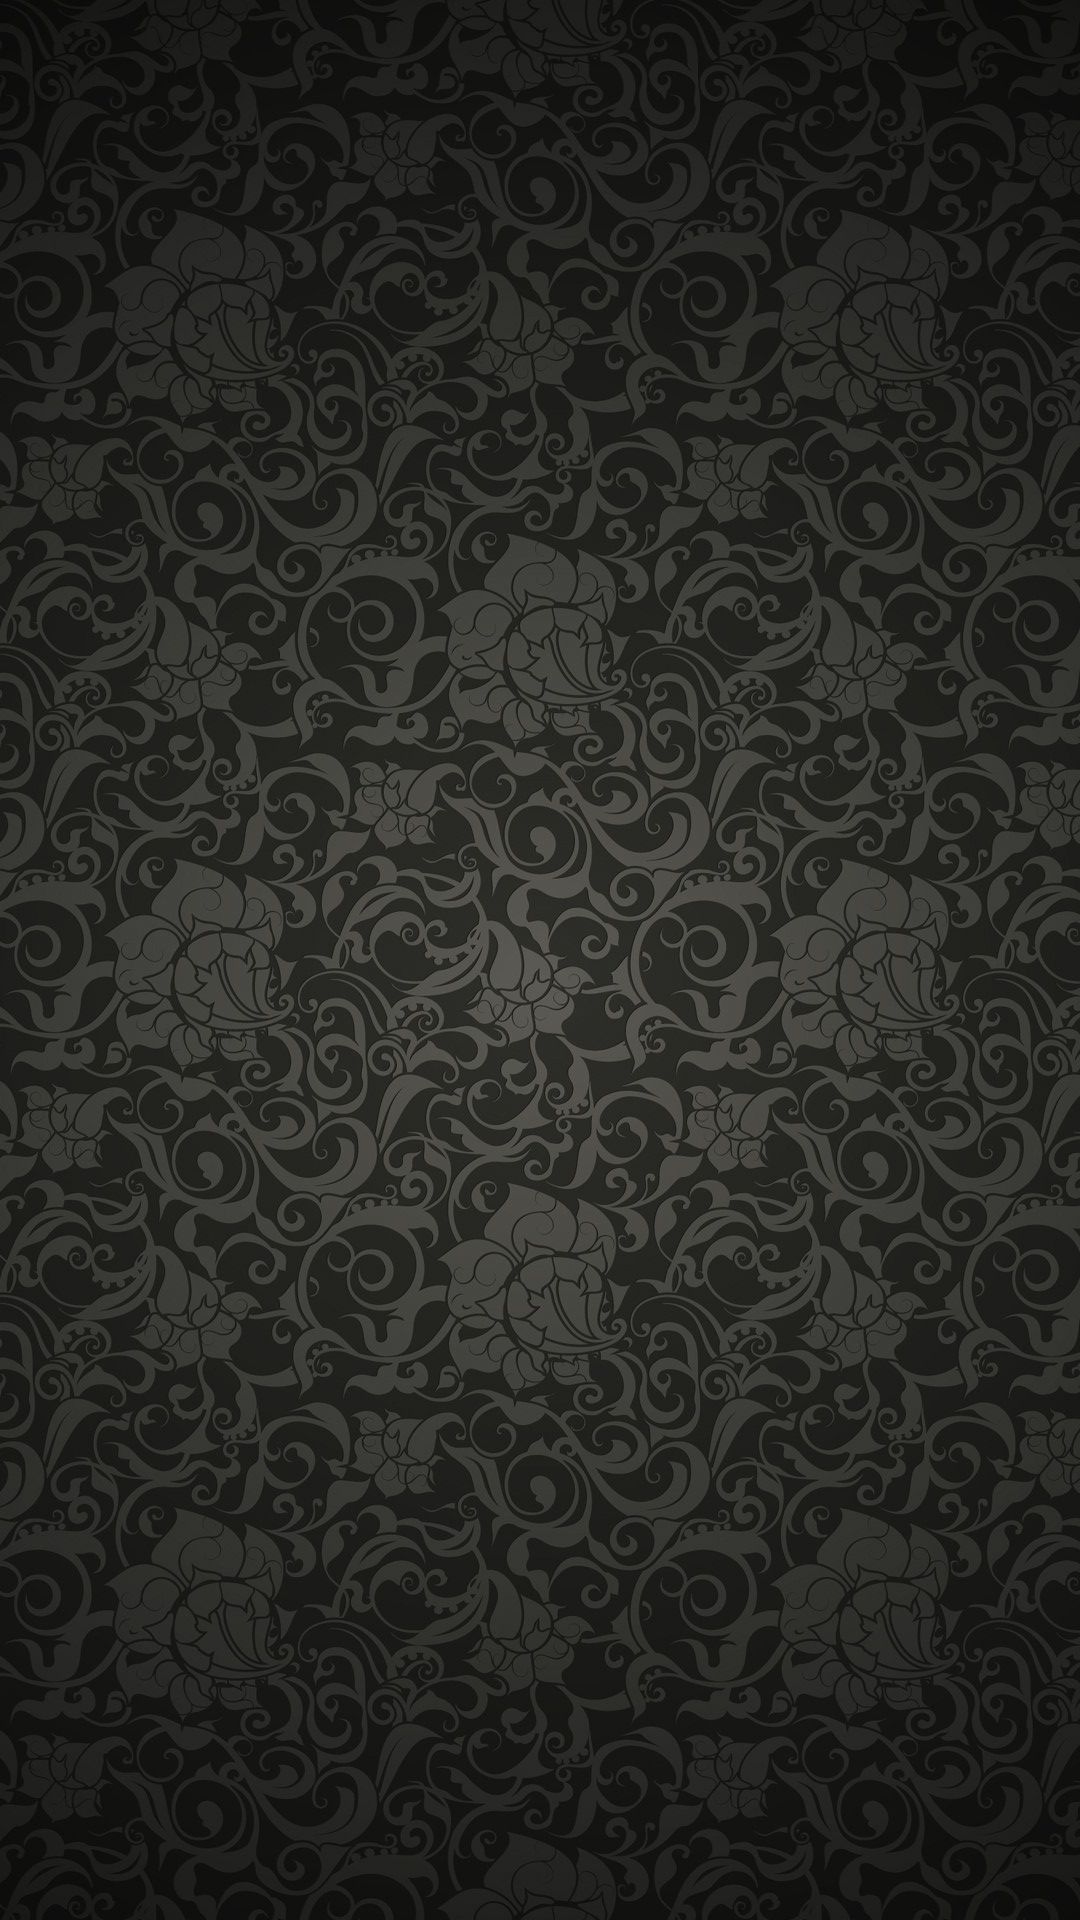 iPhone wallpaper. Whatsapp background, Dark